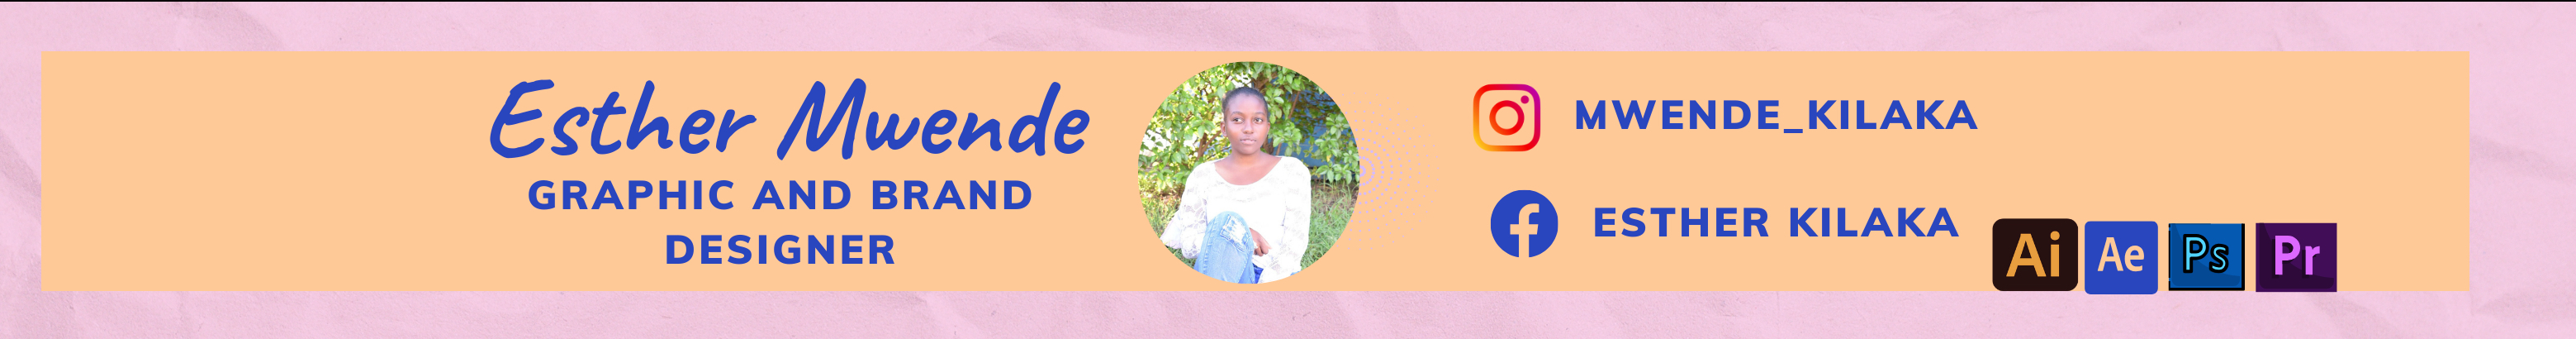 Banner de perfil de Esther Mwende